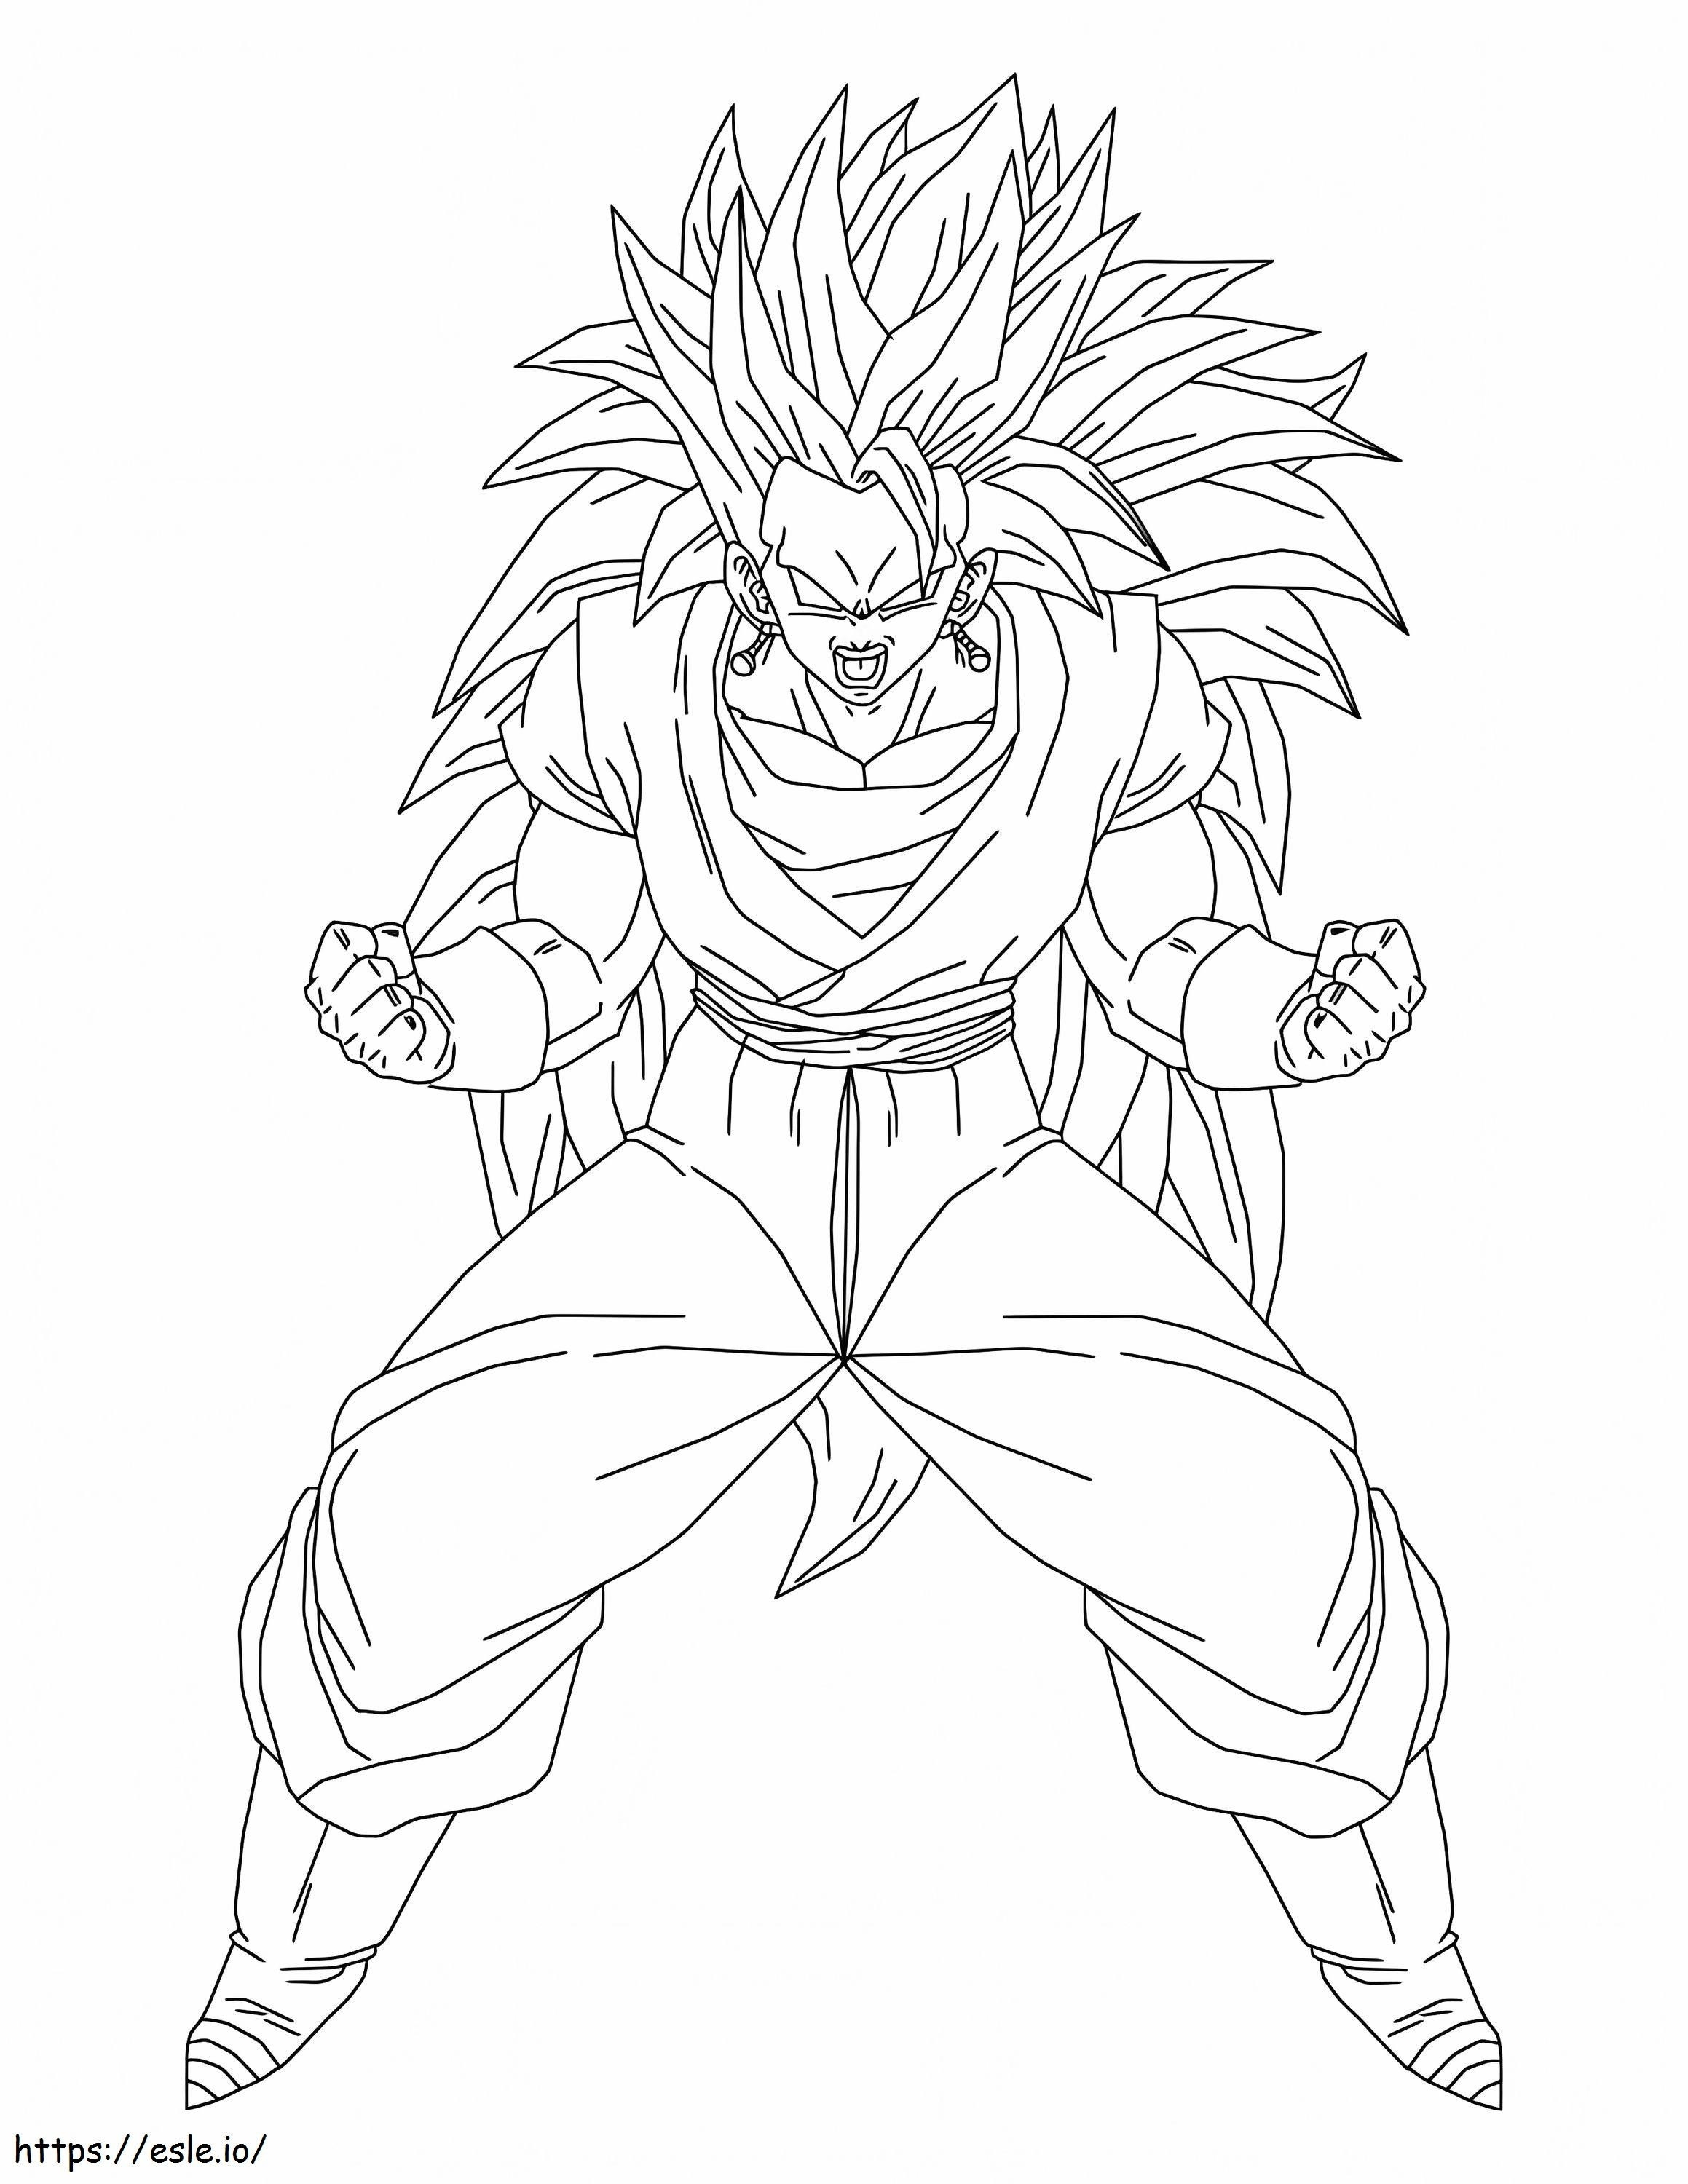 Enojado Goku Ssj3 coloring page